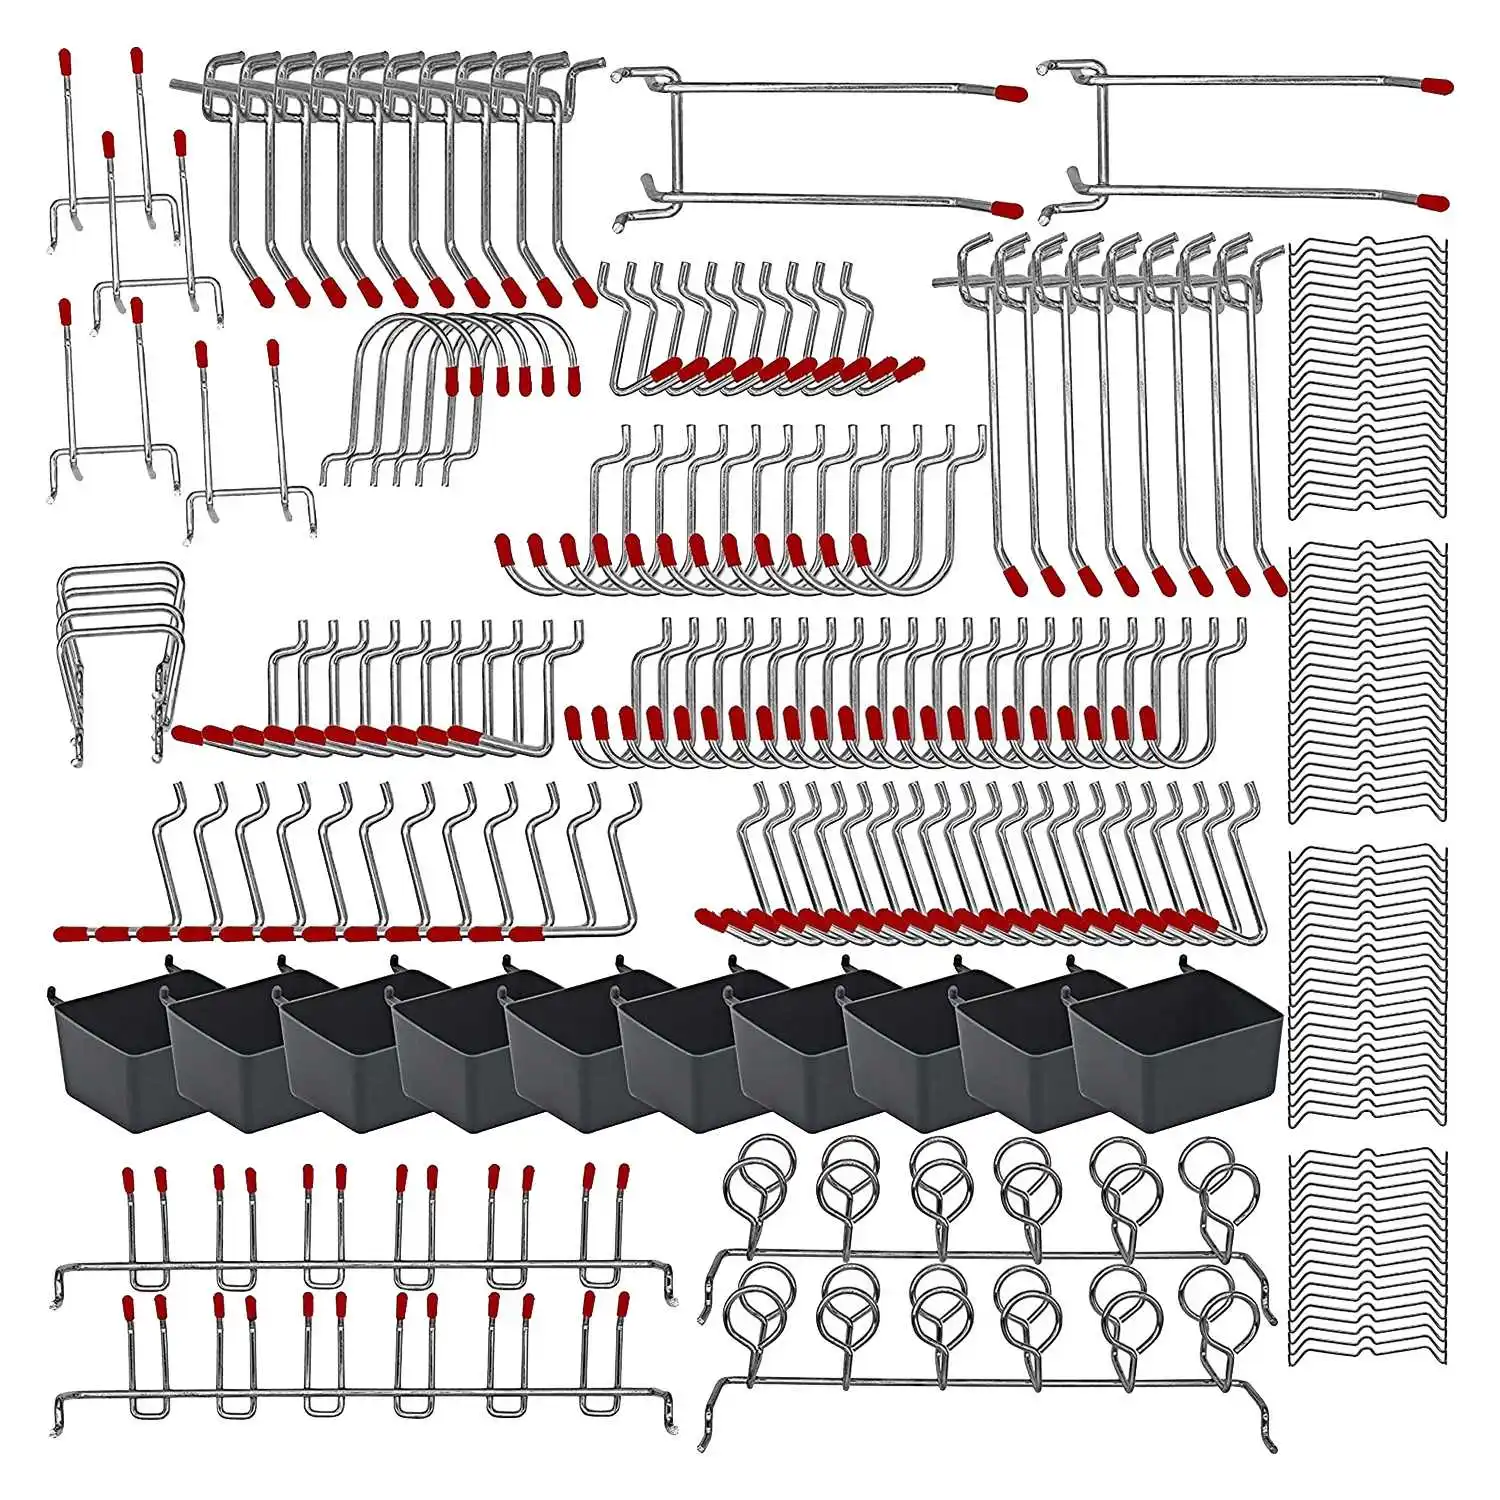 

228 Pcs Pegboard Hooks Assortment with Metal Hooks Sets, Pegboard Bins, Peg Locks for Organizing Storage System Tools